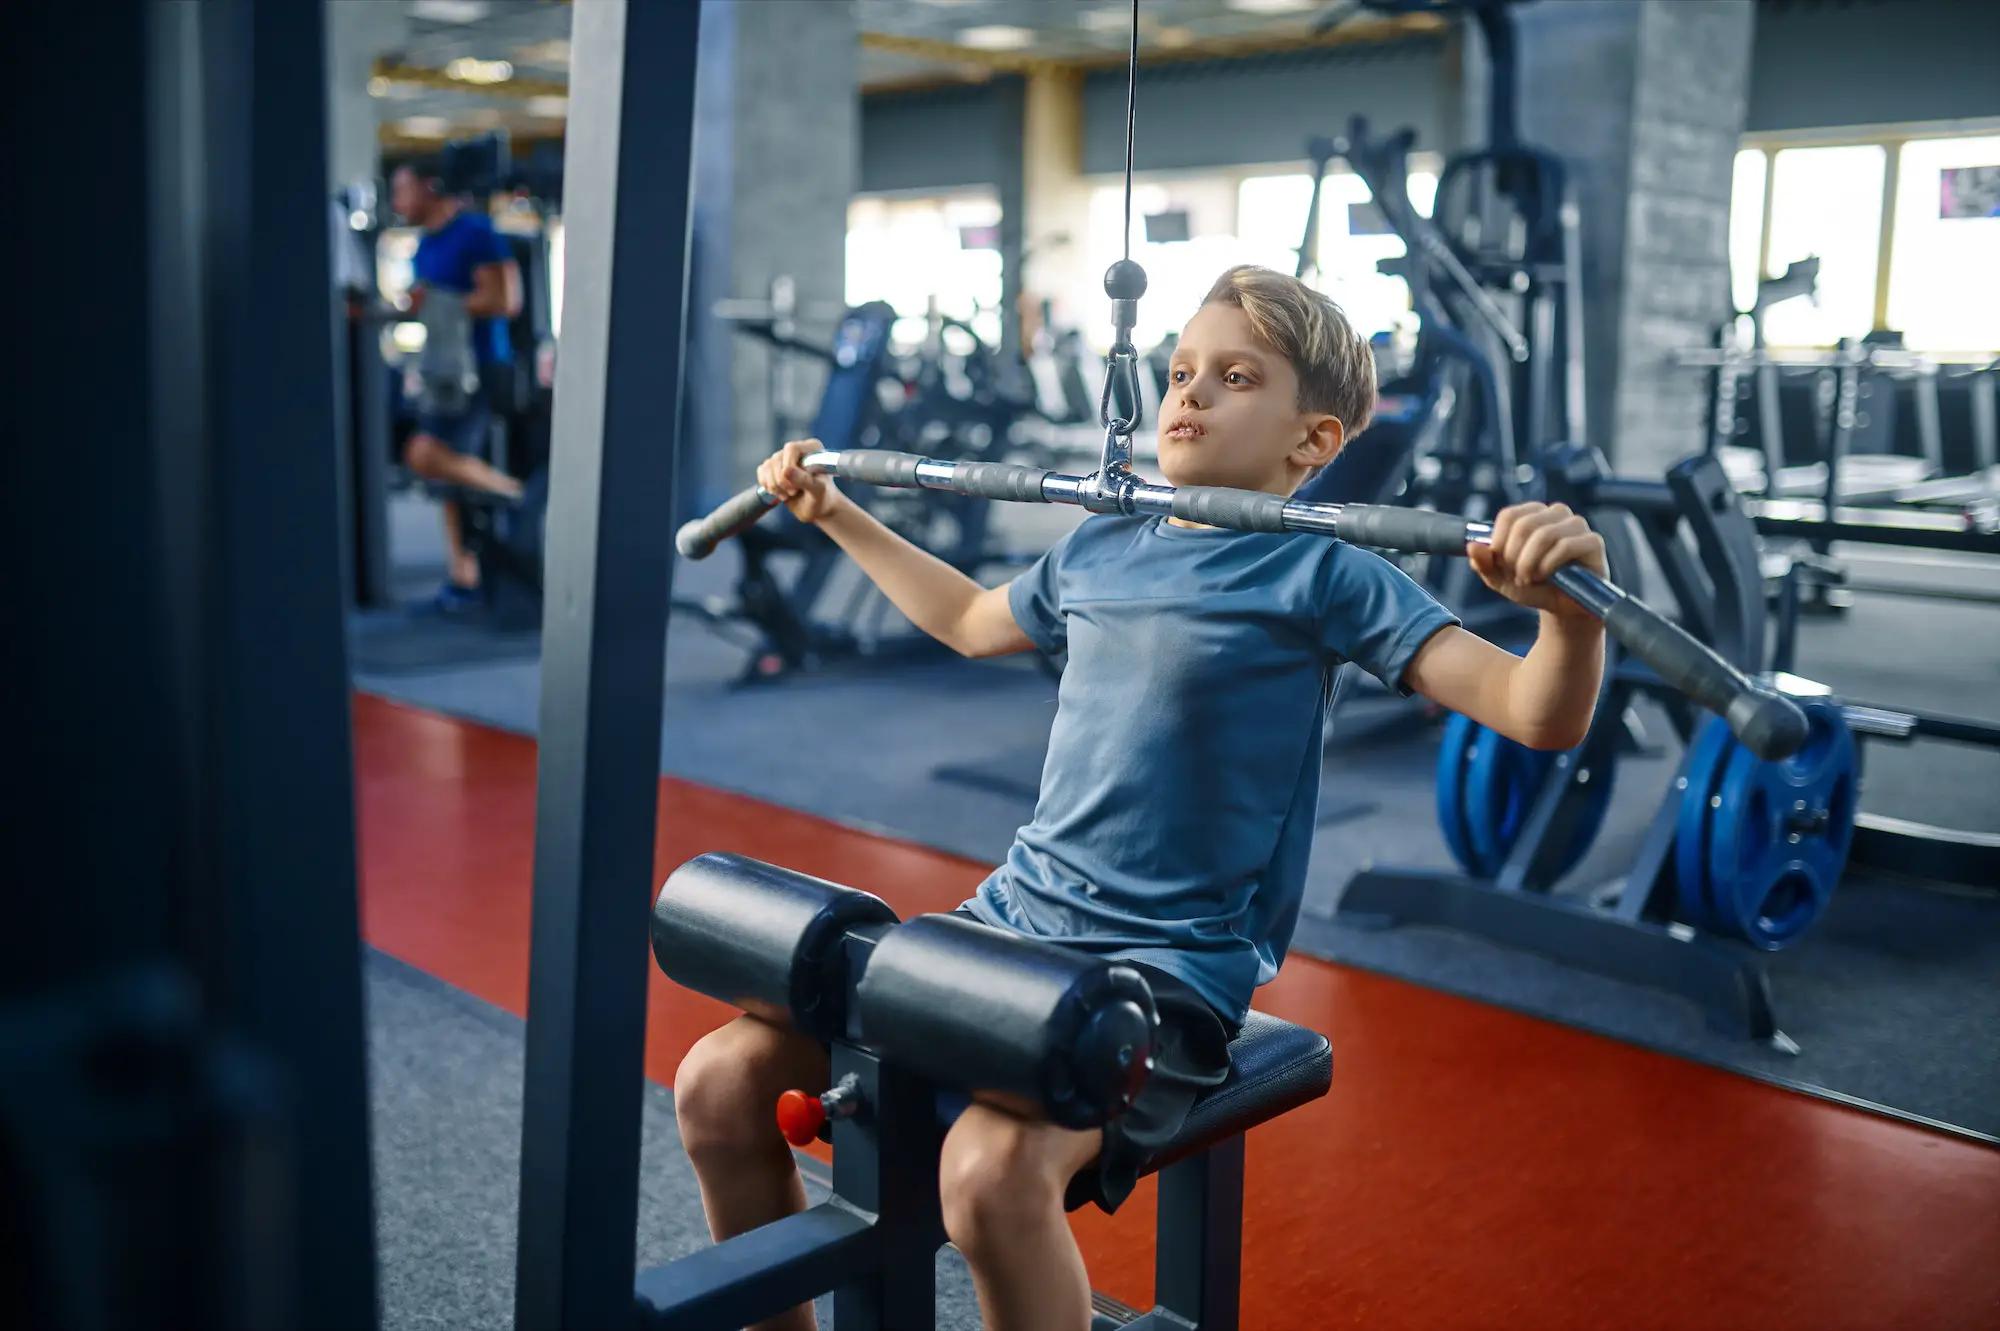 Boy on exercise machine, training in gym